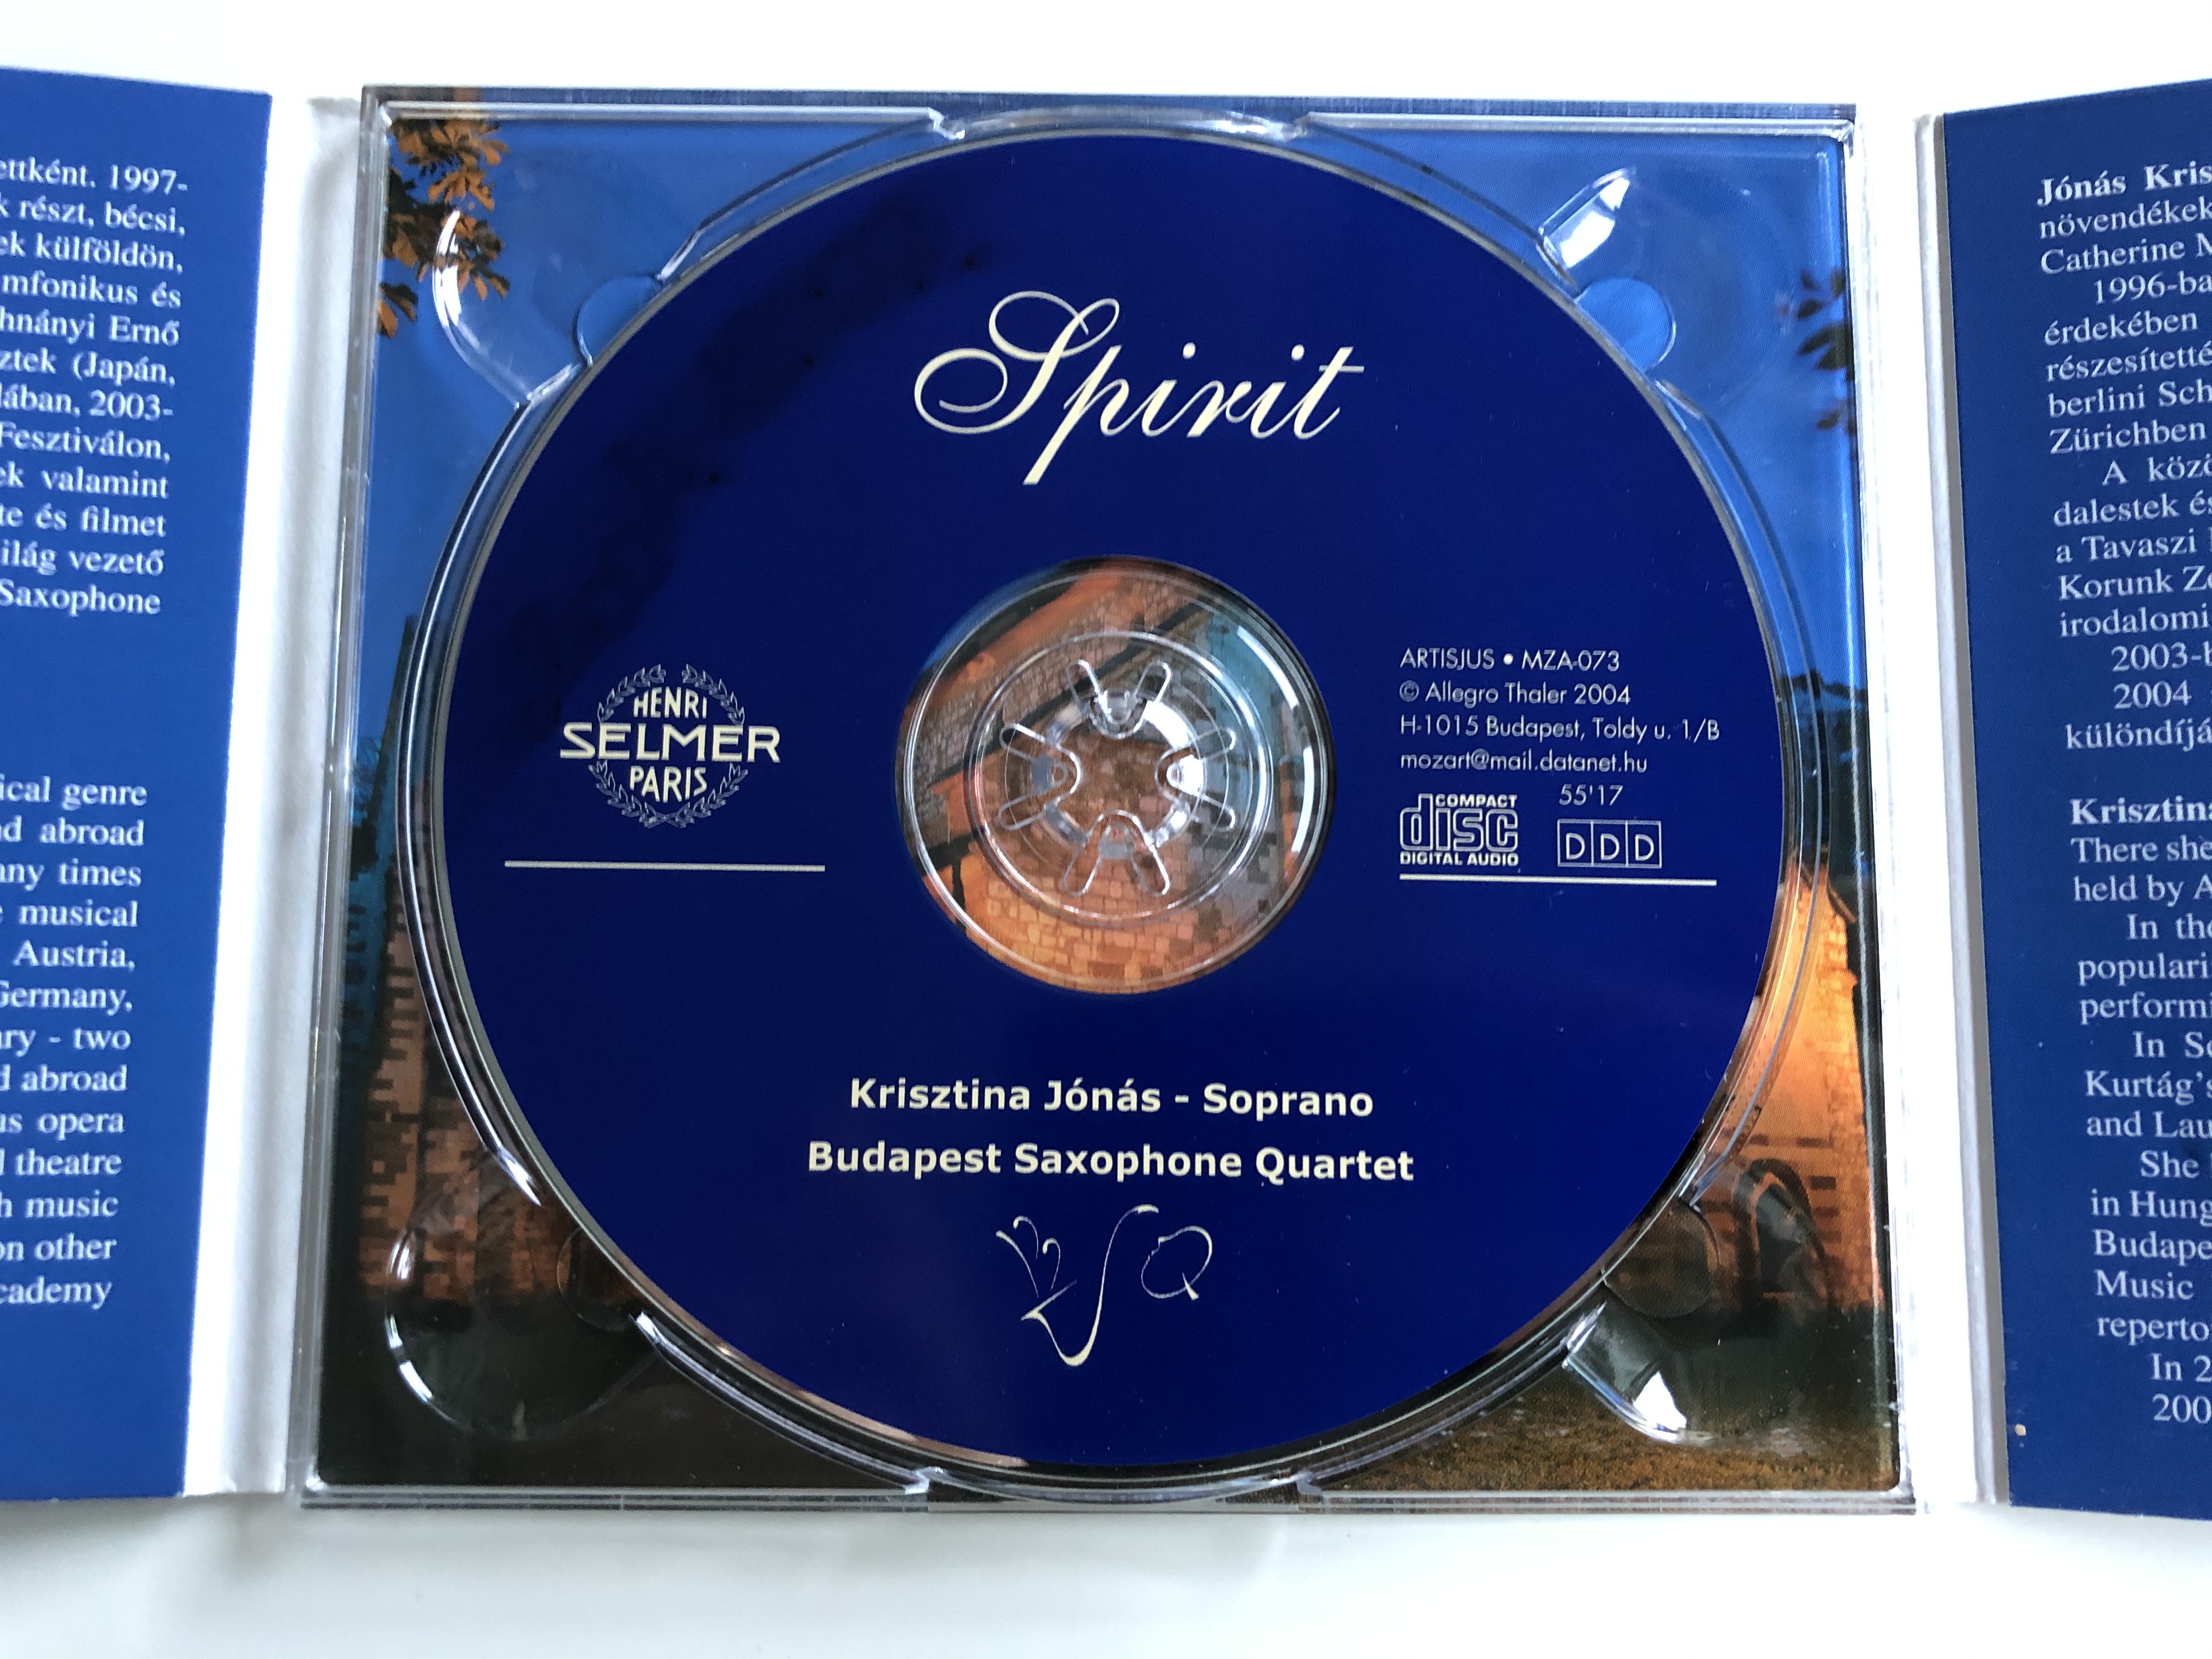 spirit-soprano-krisztina-jonas-budapest-saxophone-quartet-allero-thaler-audio-cd-2004-mza-073-5-.jpg